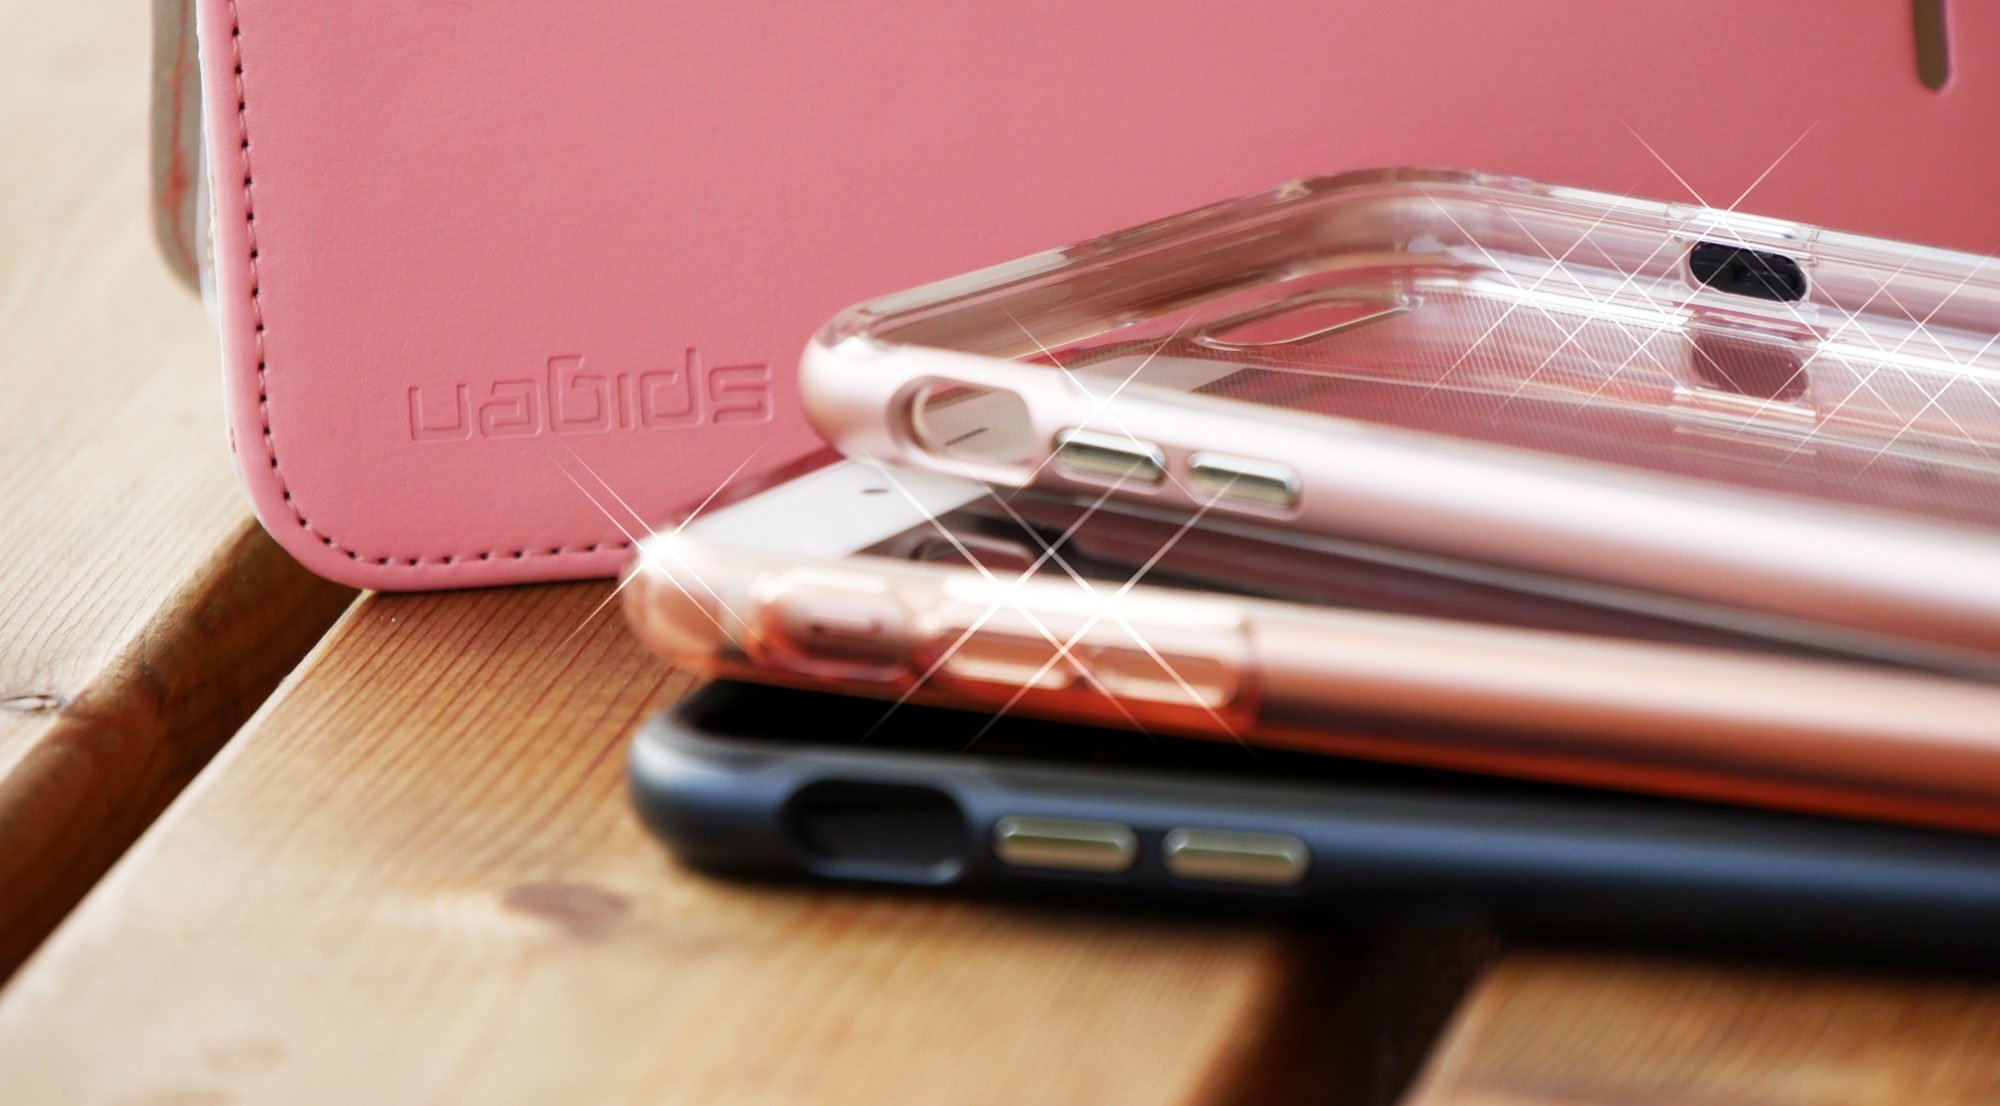 iPhone 6s Hüllen-Test: die besten Cases & Schutzhüllen fürs iPhone 6s & iPhone 6s Plus 6